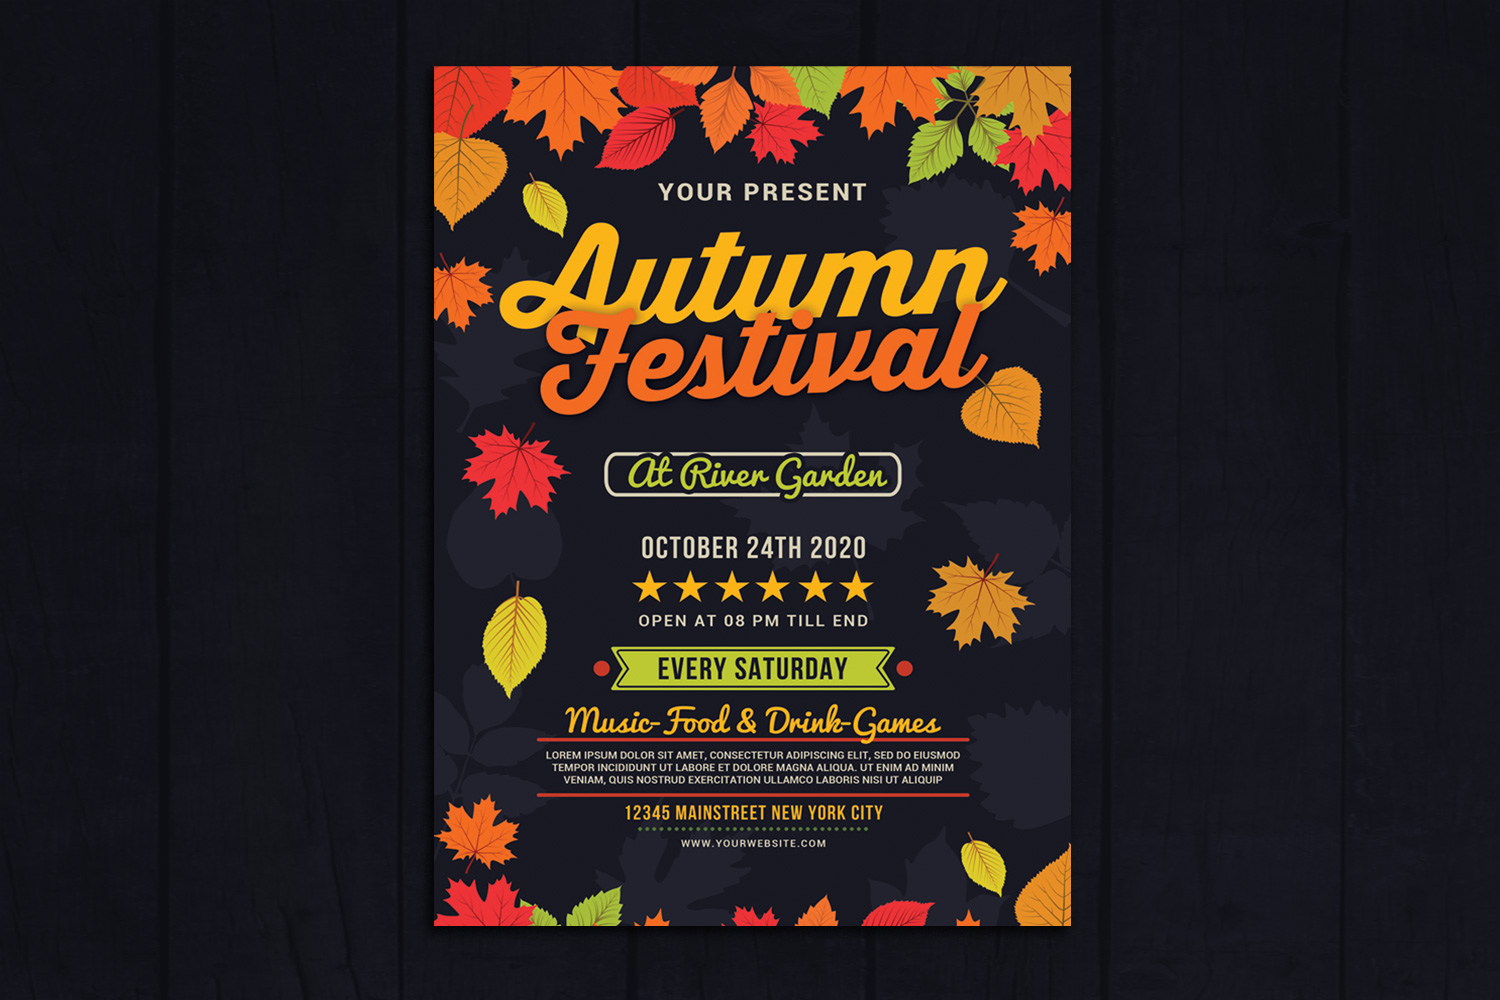 Autumn Festival Flyer - Corporate Identity Template